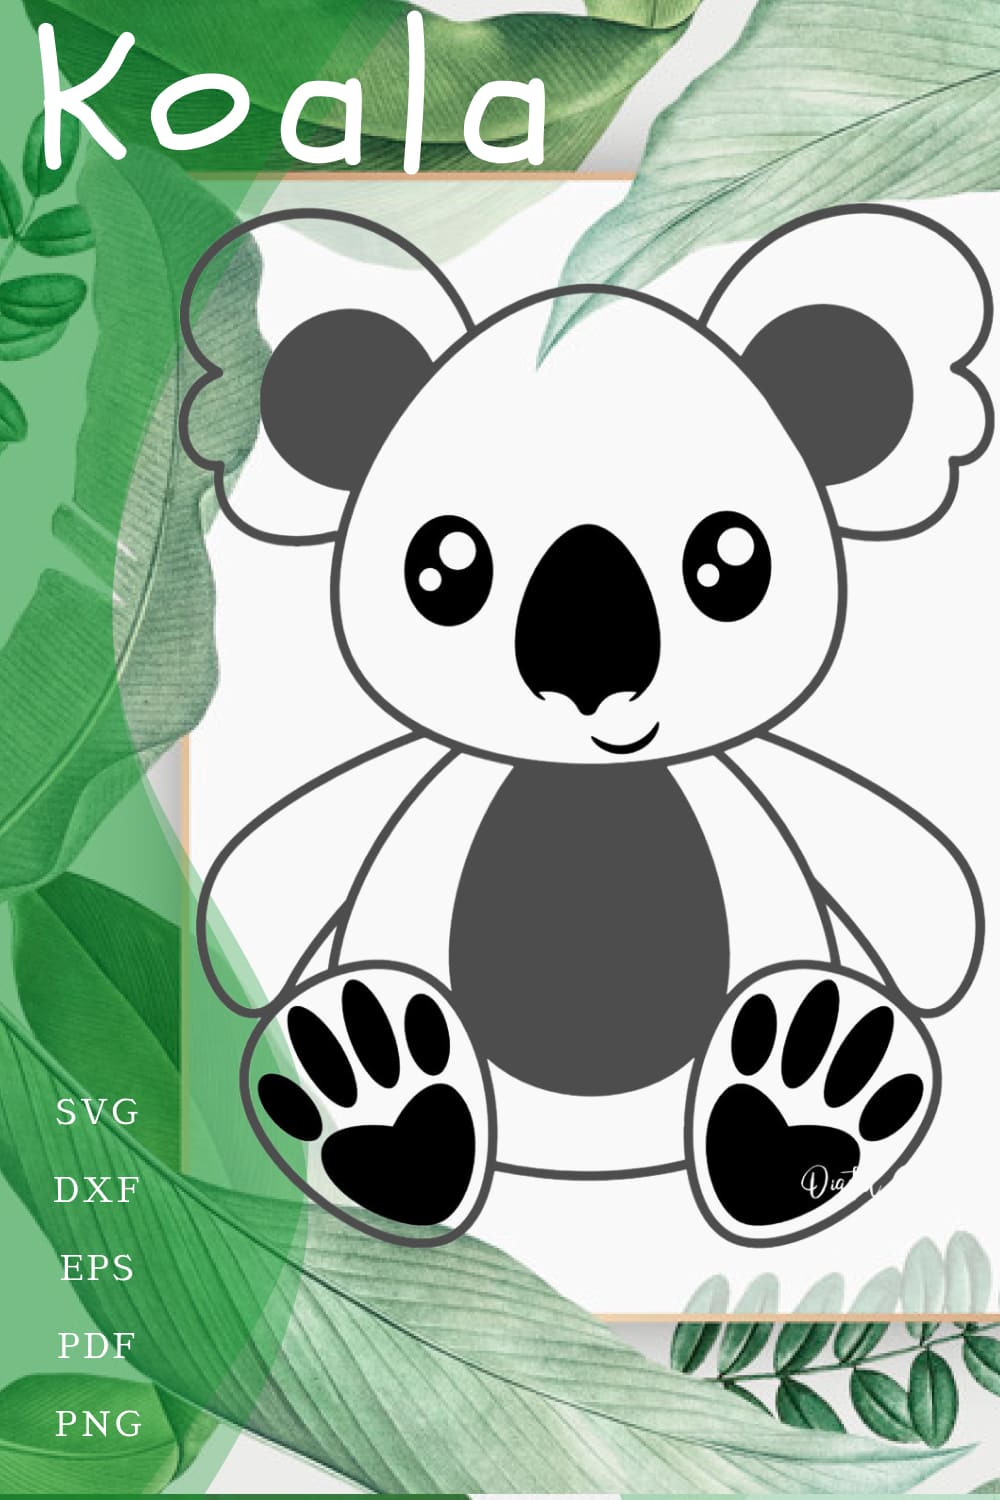 Koala SVG / PNG / EPS / DXF Files.